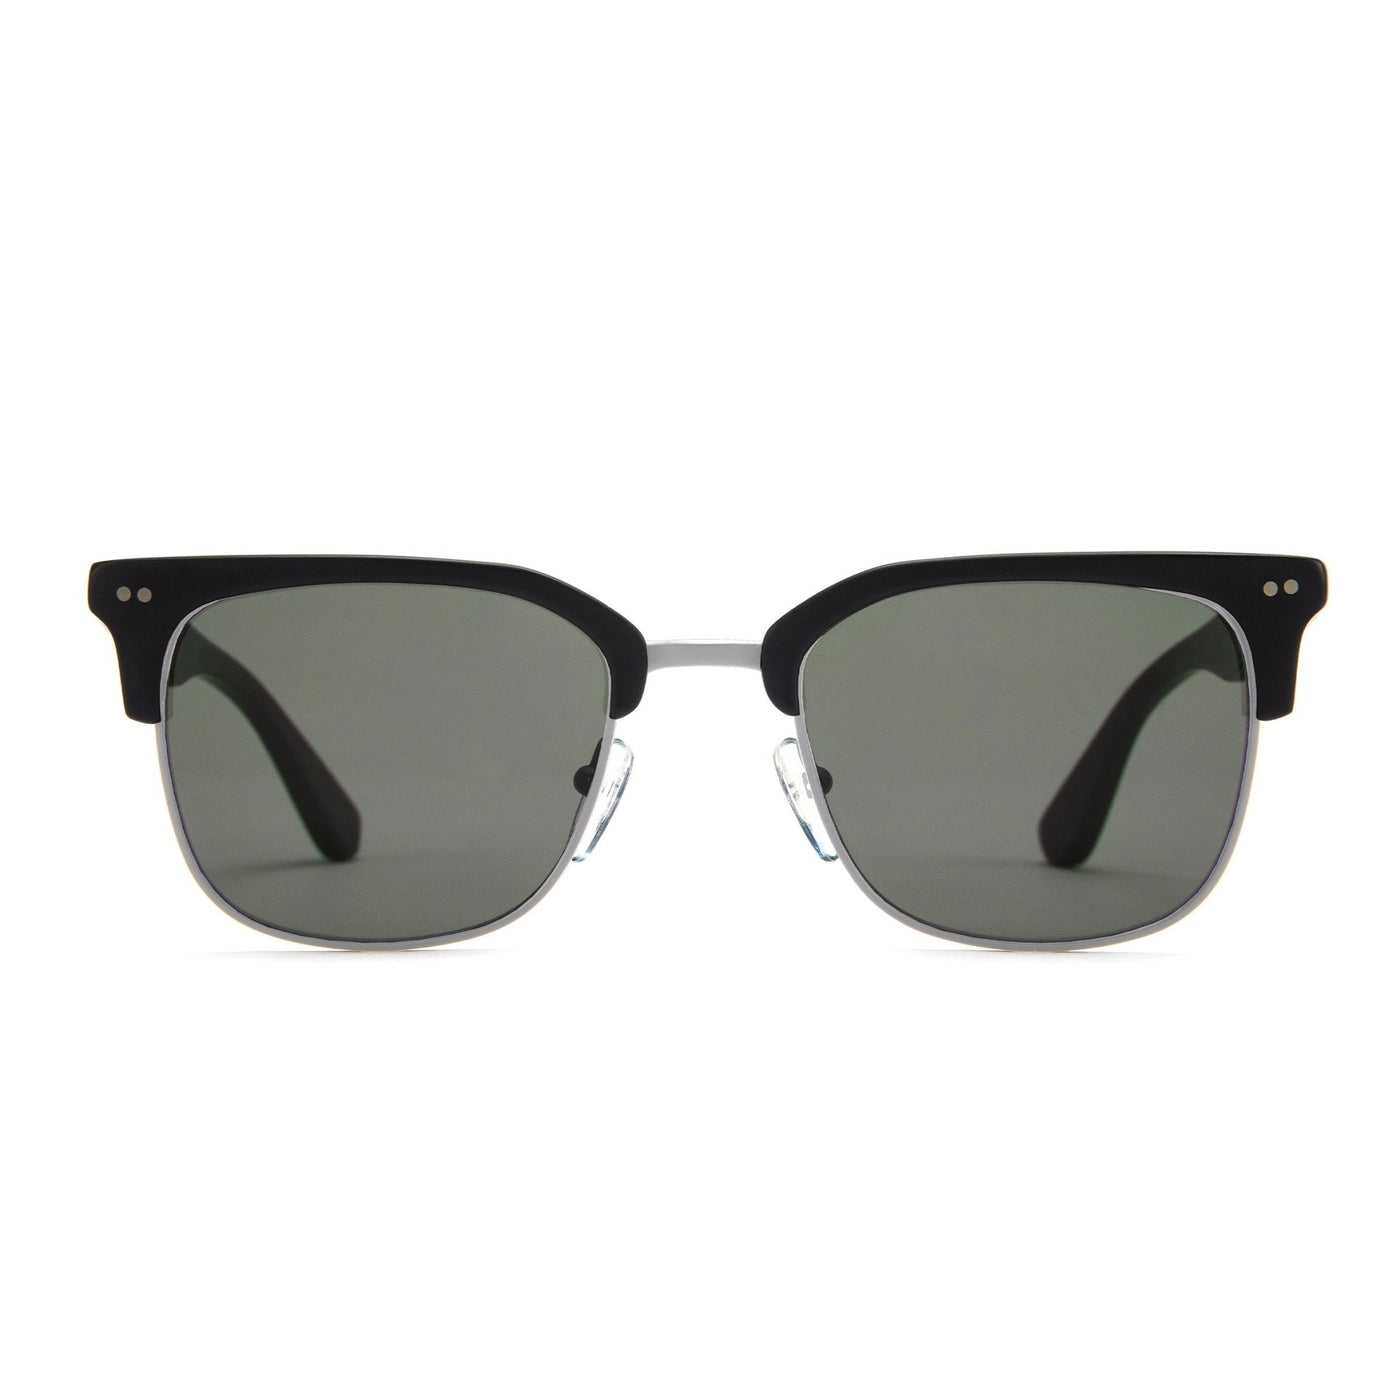 OTIS-Eyewear-Sunglasses-Grey-100club